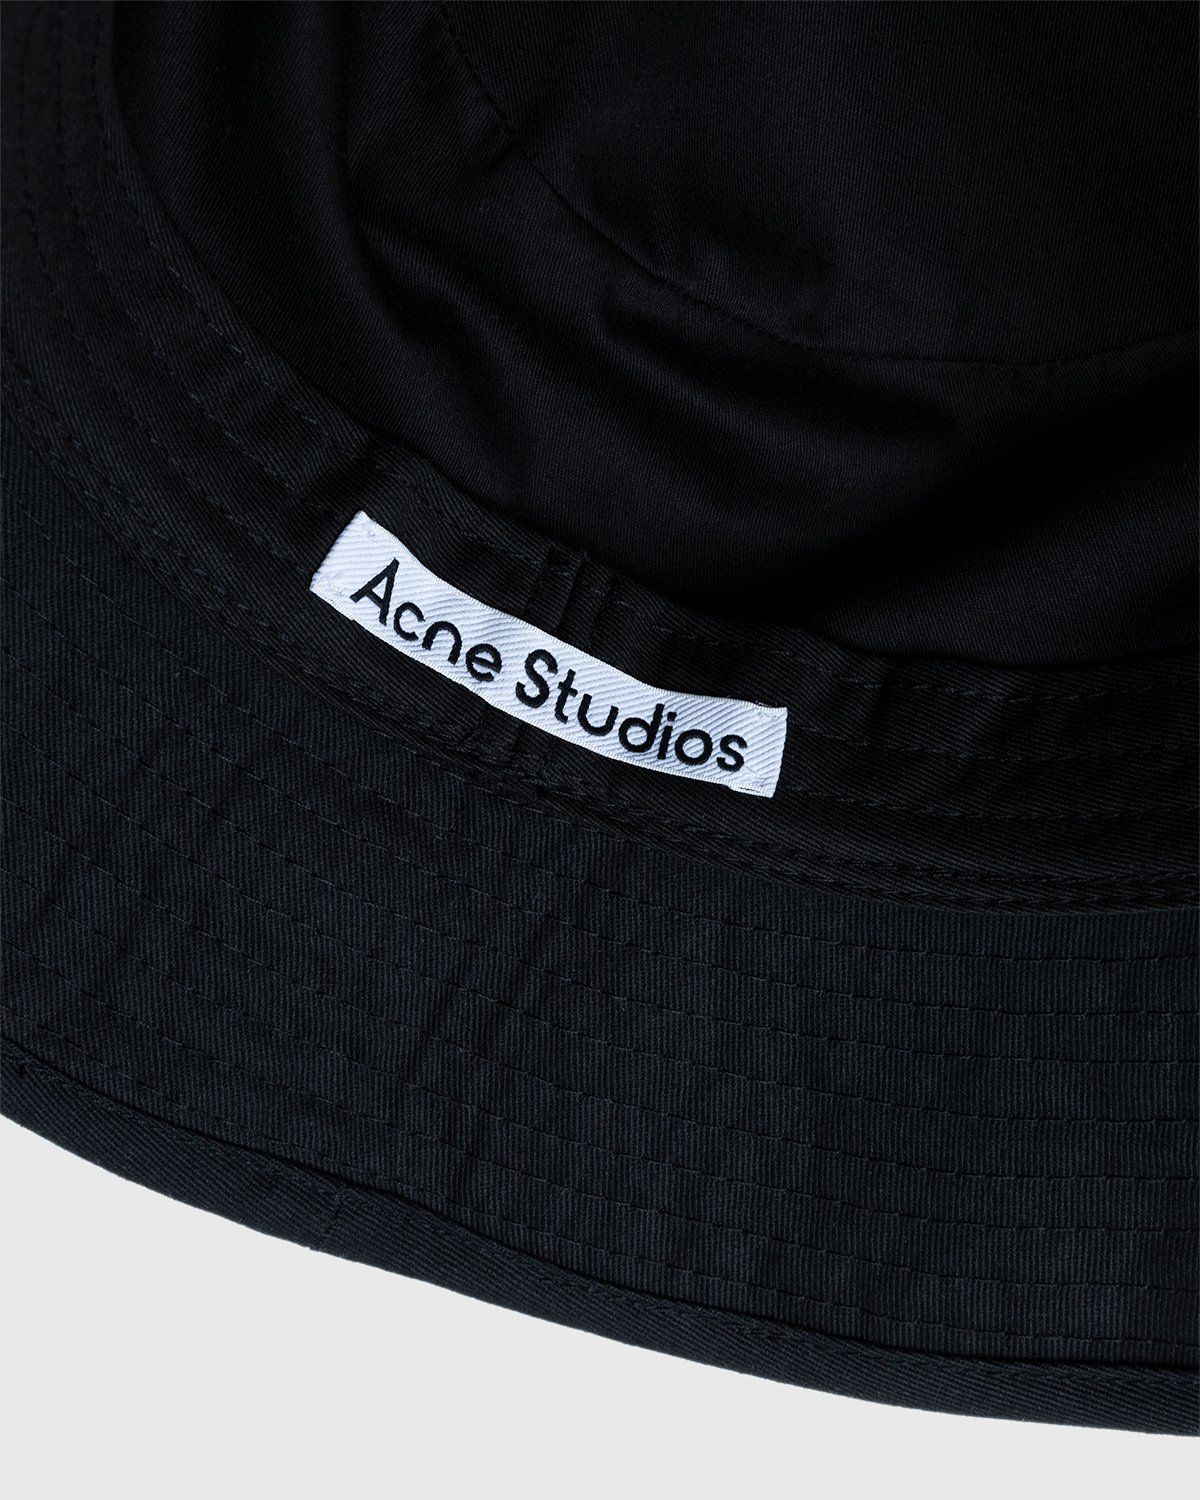 Acne Studios – Twill Bucket Hat Black - Image 4